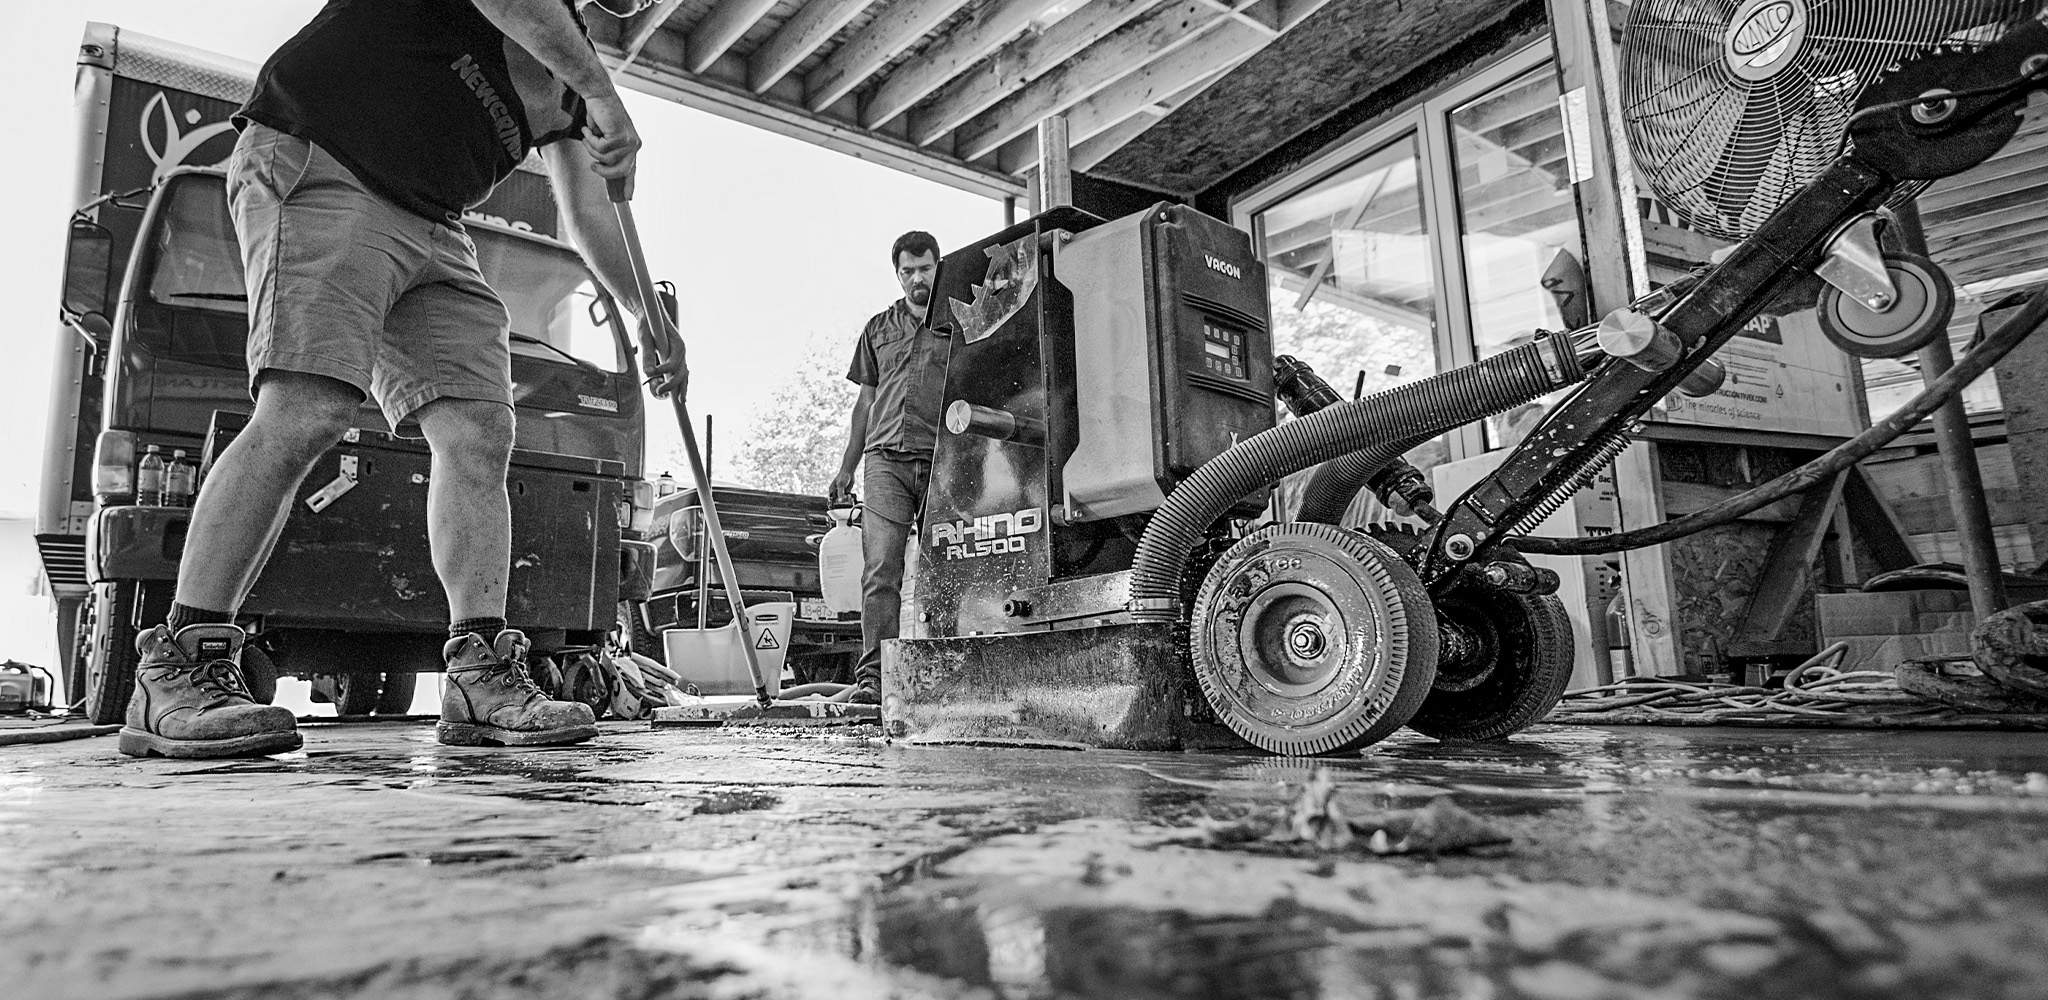 NewGrind team members using the Rhino RL500 to grind a concrete garage floor.